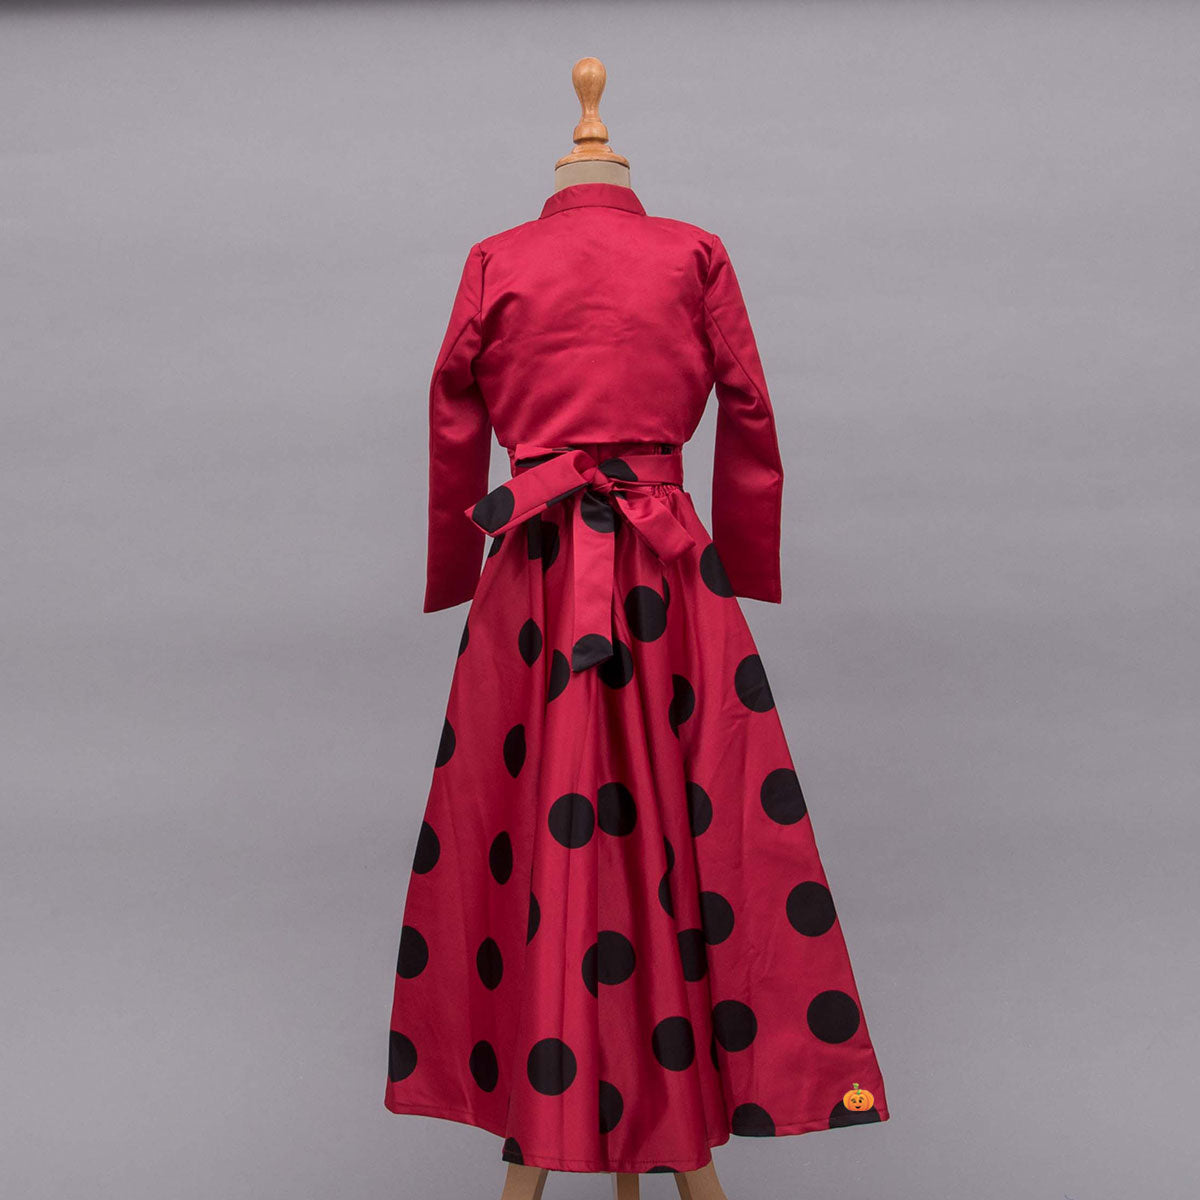 Buy Paul Smith Junior Girls Navy Occasion 'Artist Stripe' Polka Dot Dress  from the Laura Ashley online shop